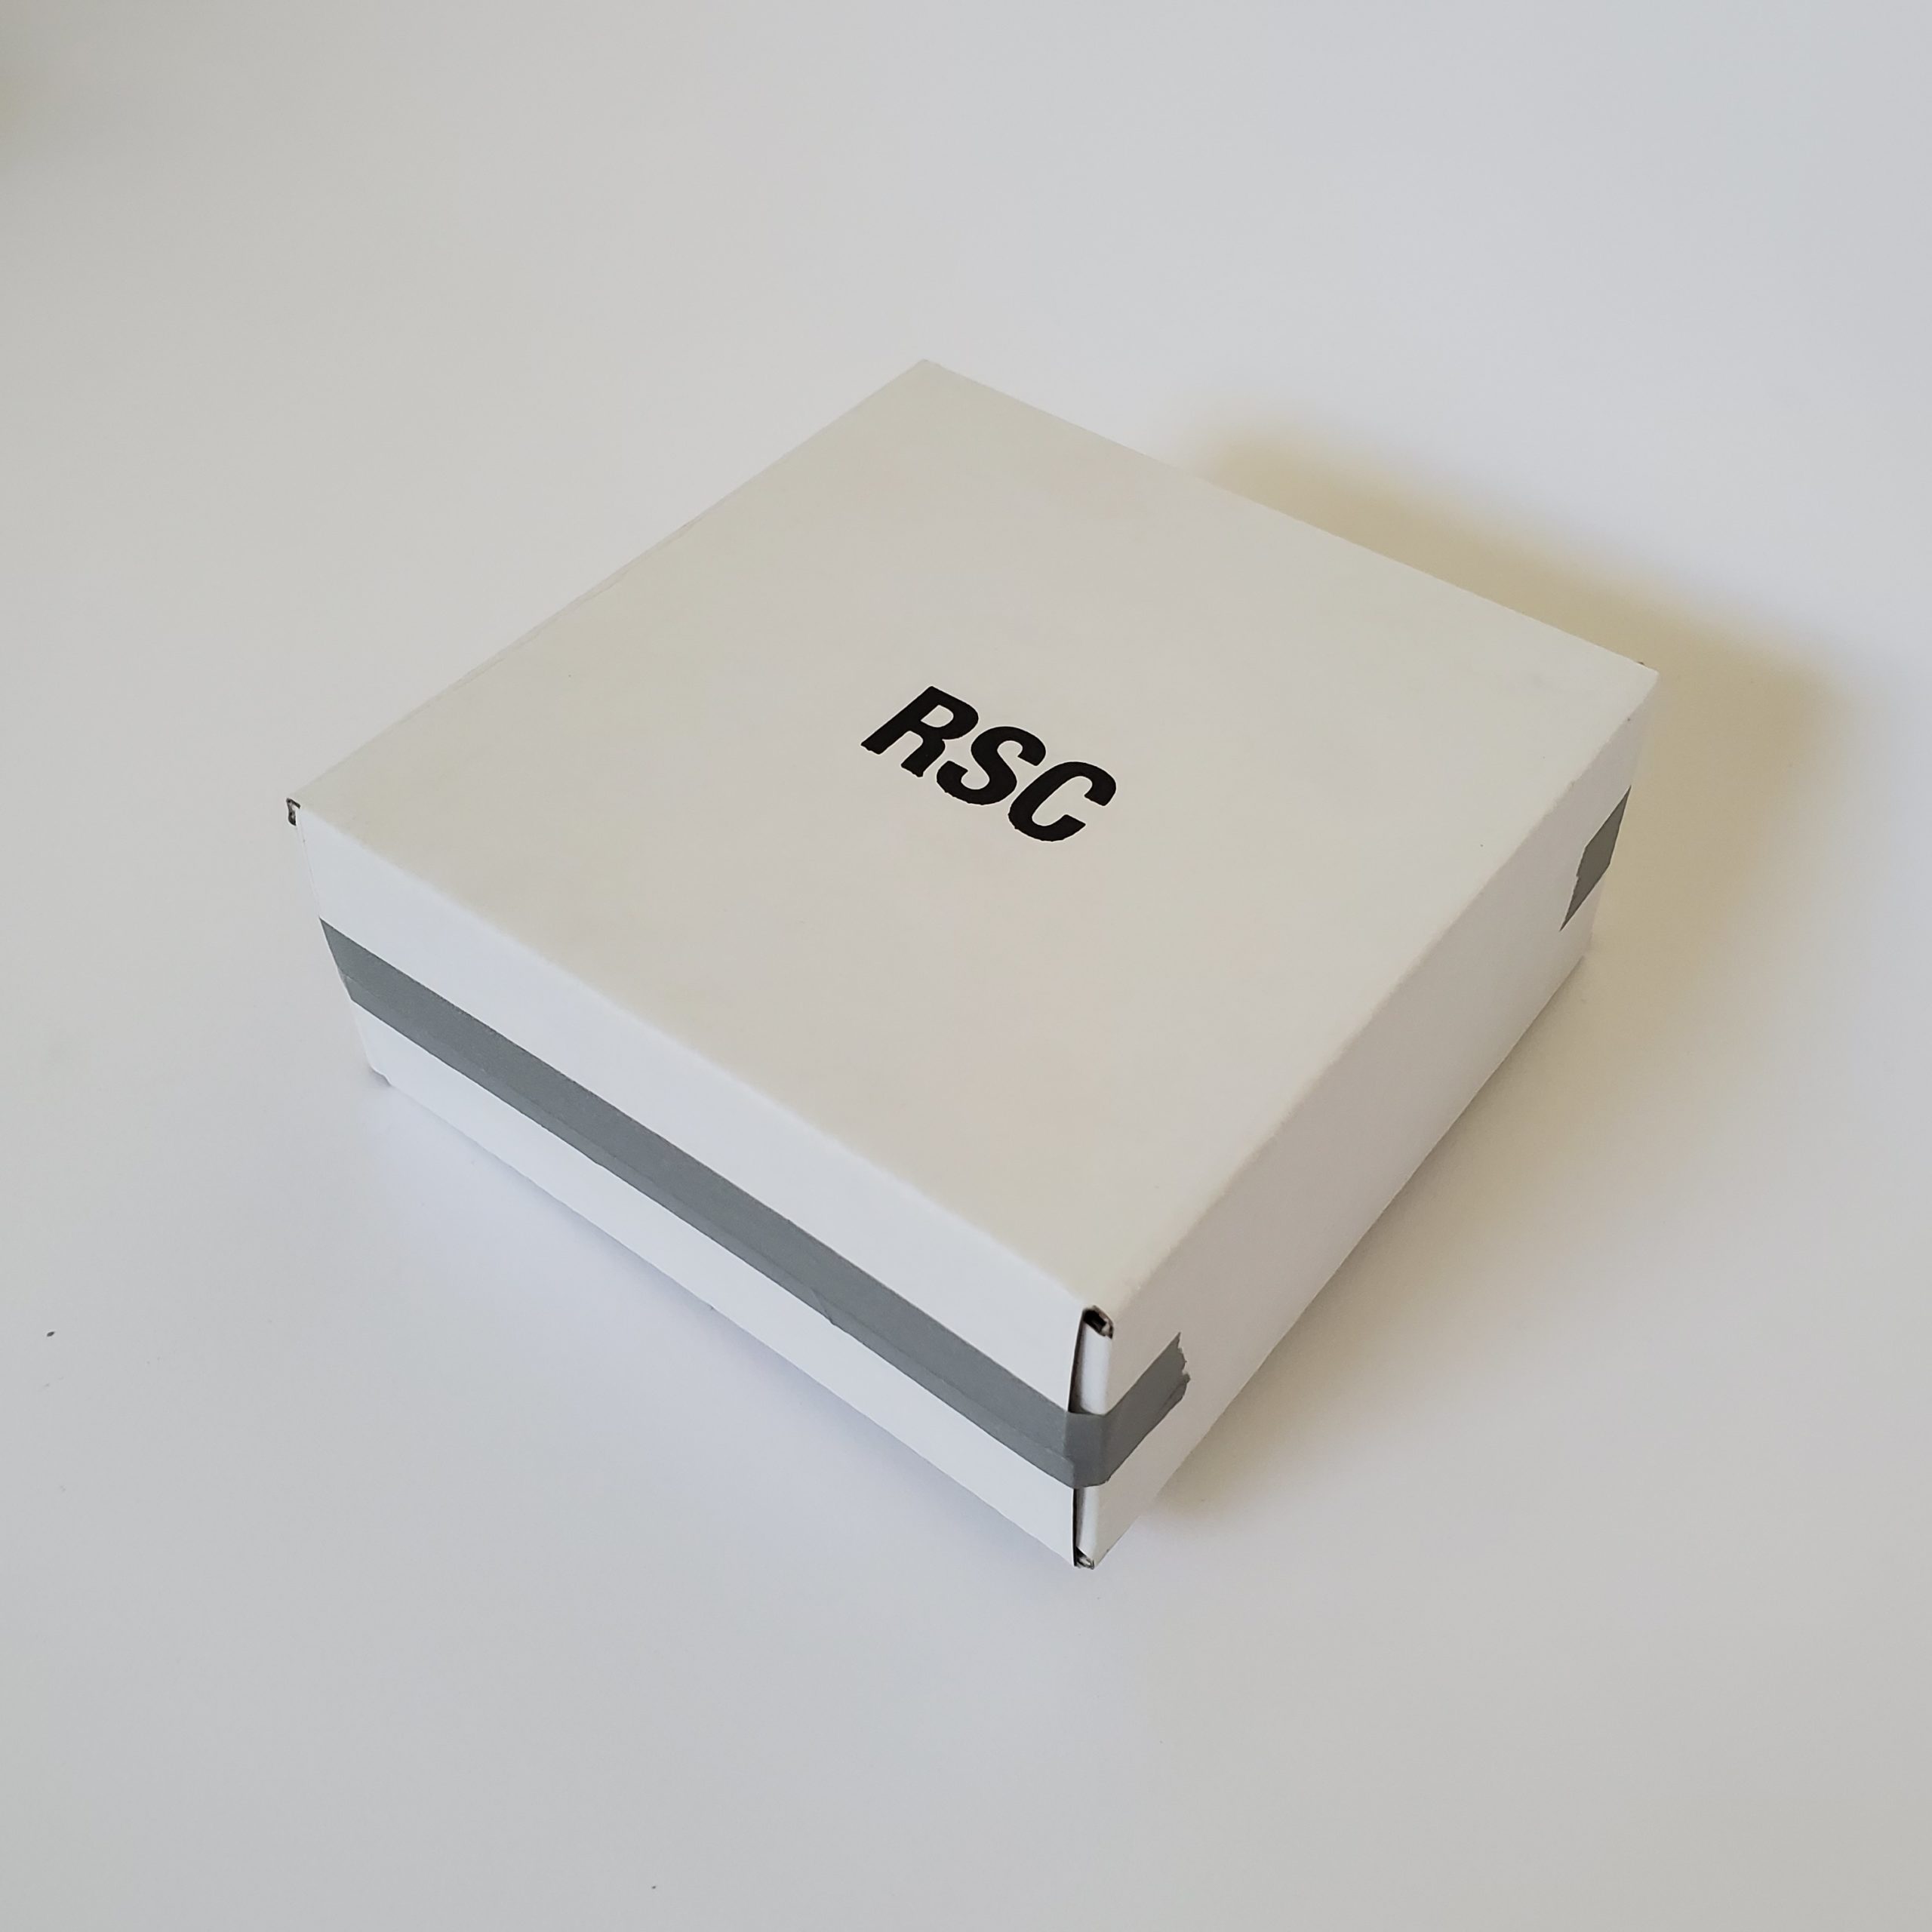 Cardboard RSC Boxes